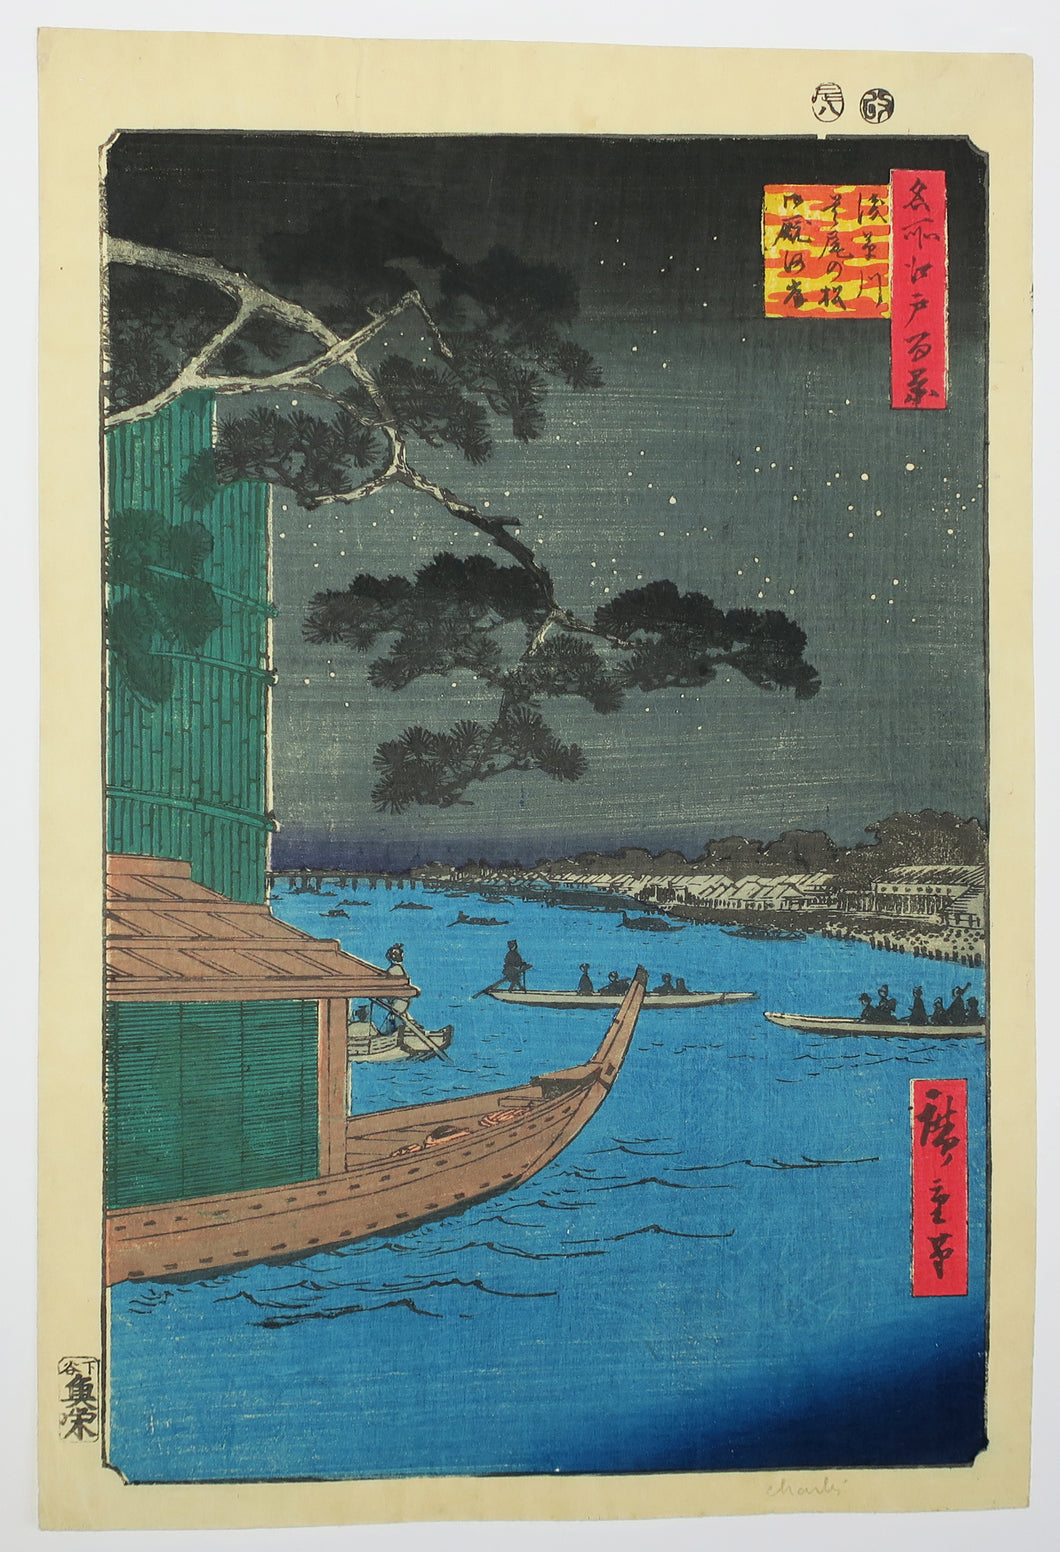 Pin du succès et Oumayagashi, Rivière Asakusa (Asakusagawa Shubi no matsu Oumayagashi).  1856-1859.